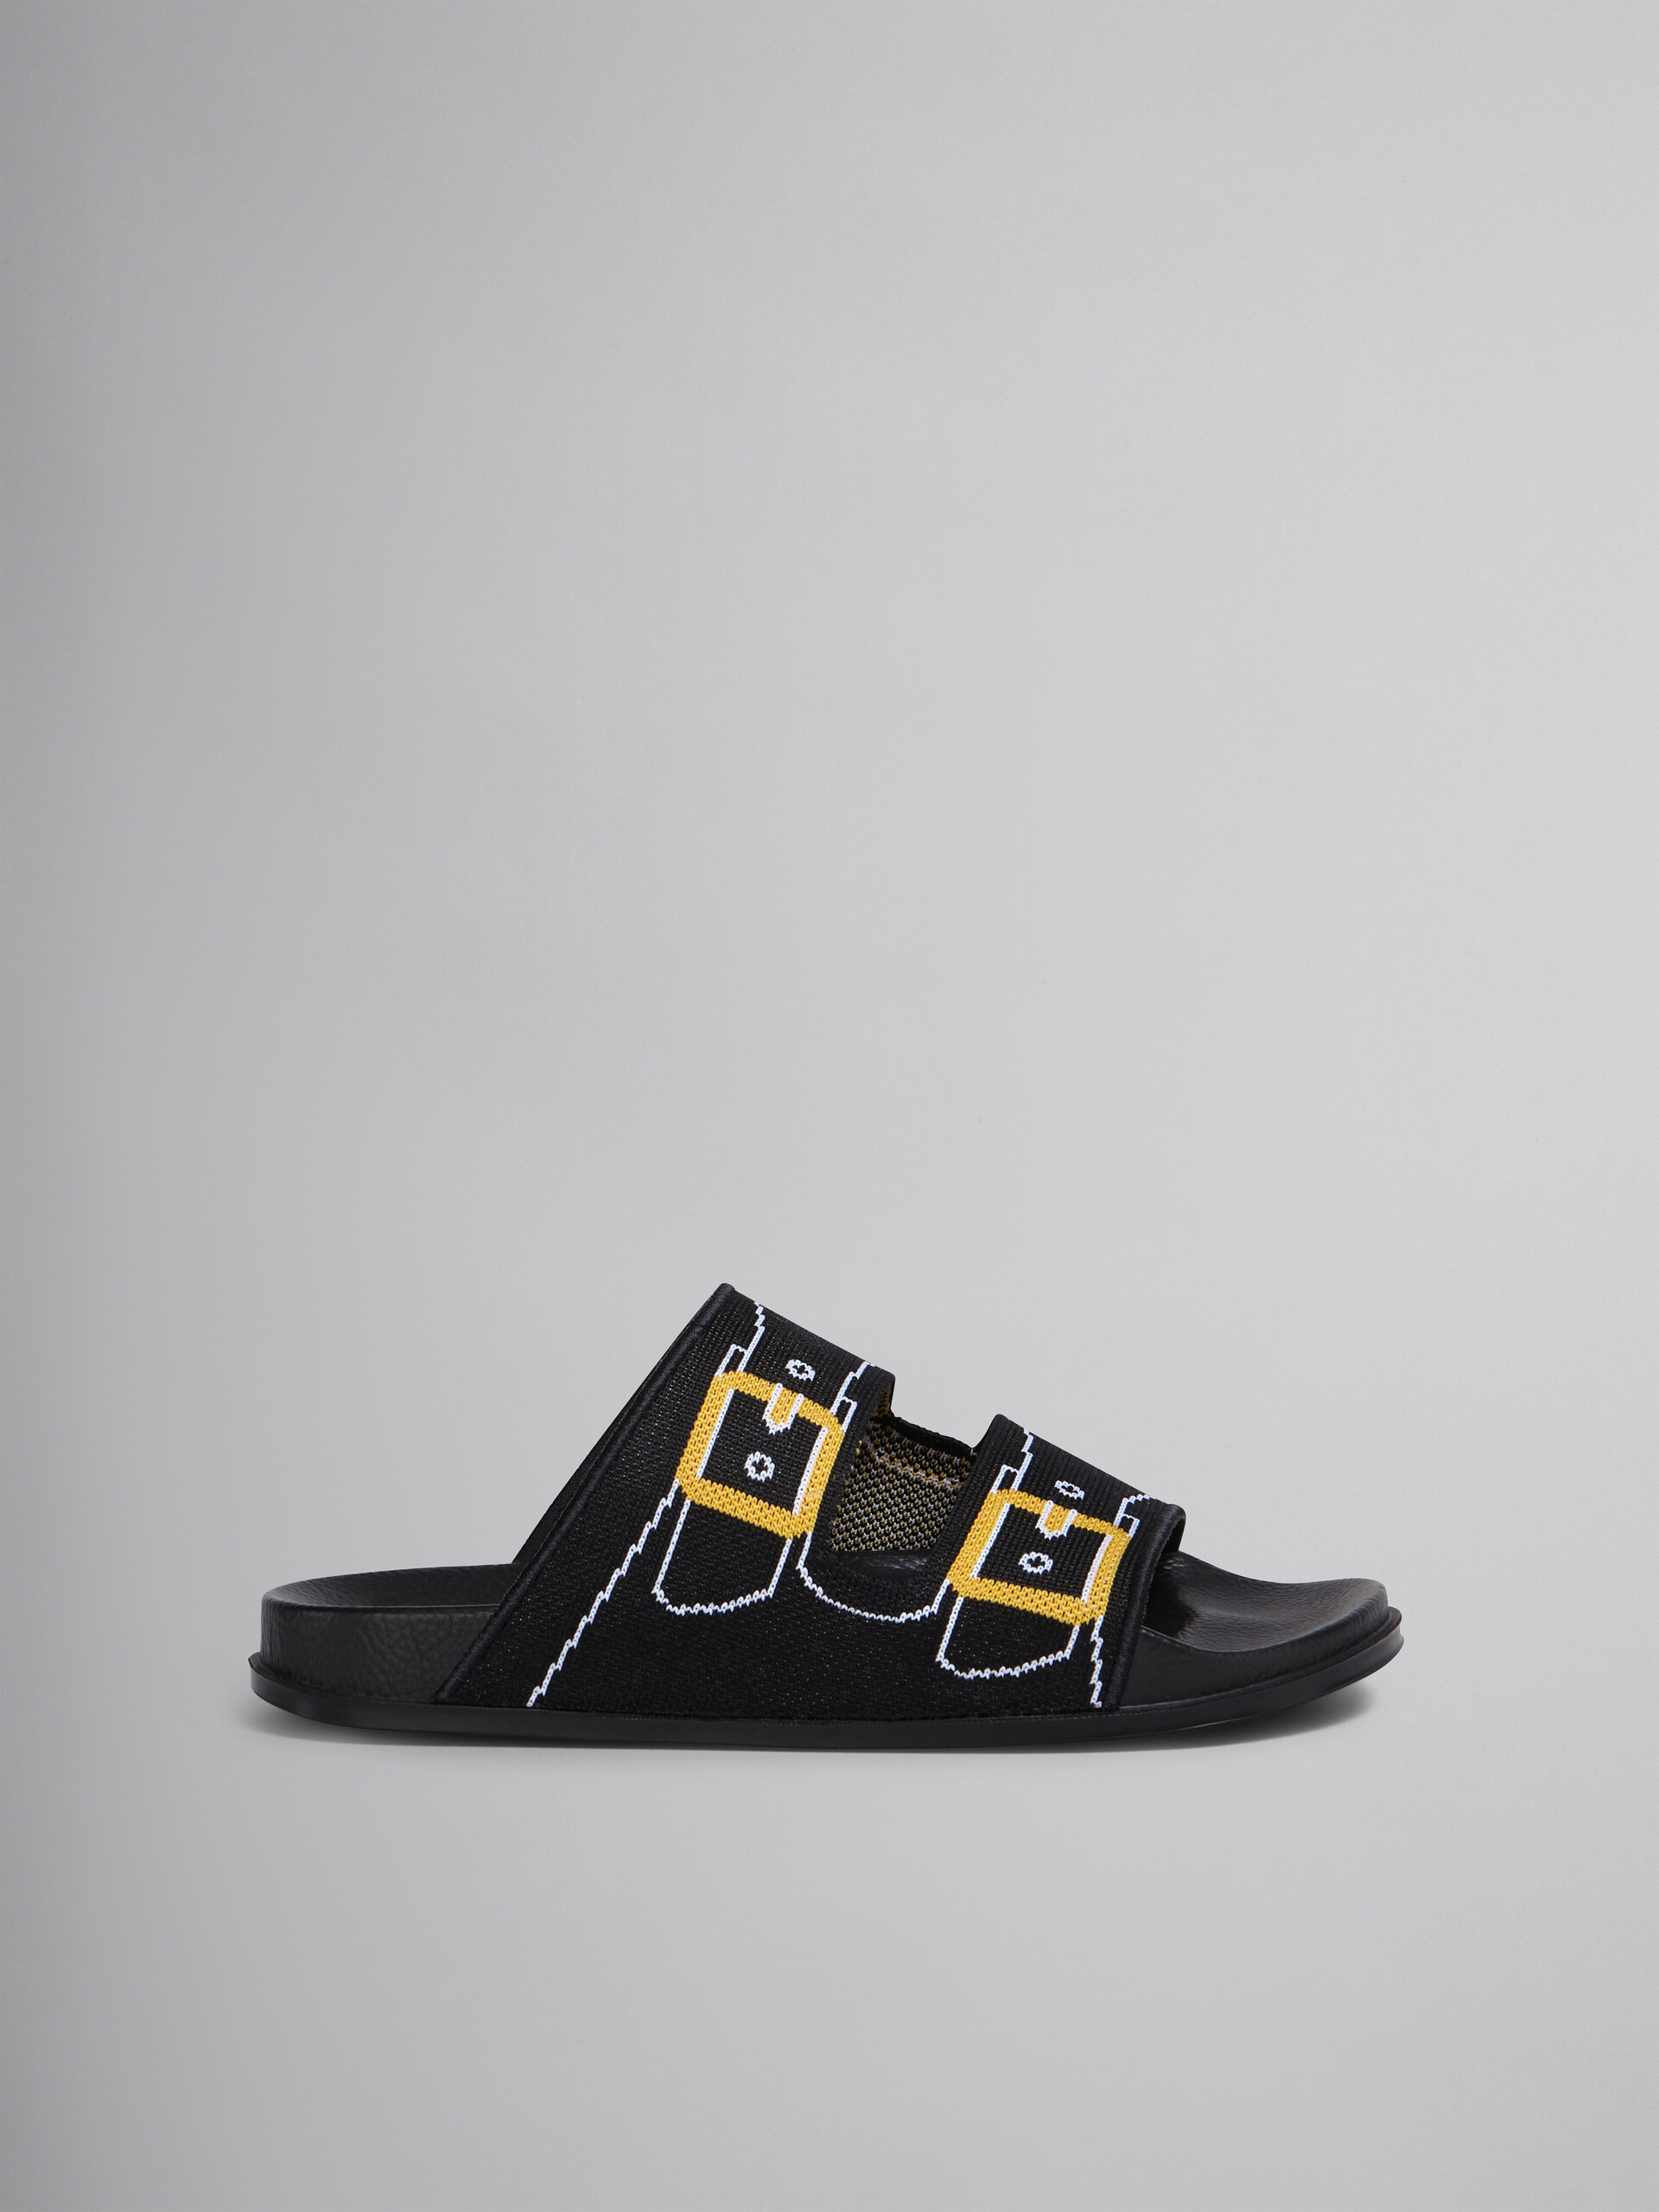 Black and gold trompe l'oeil jacquard two-strap slide - Sandals - Image 1